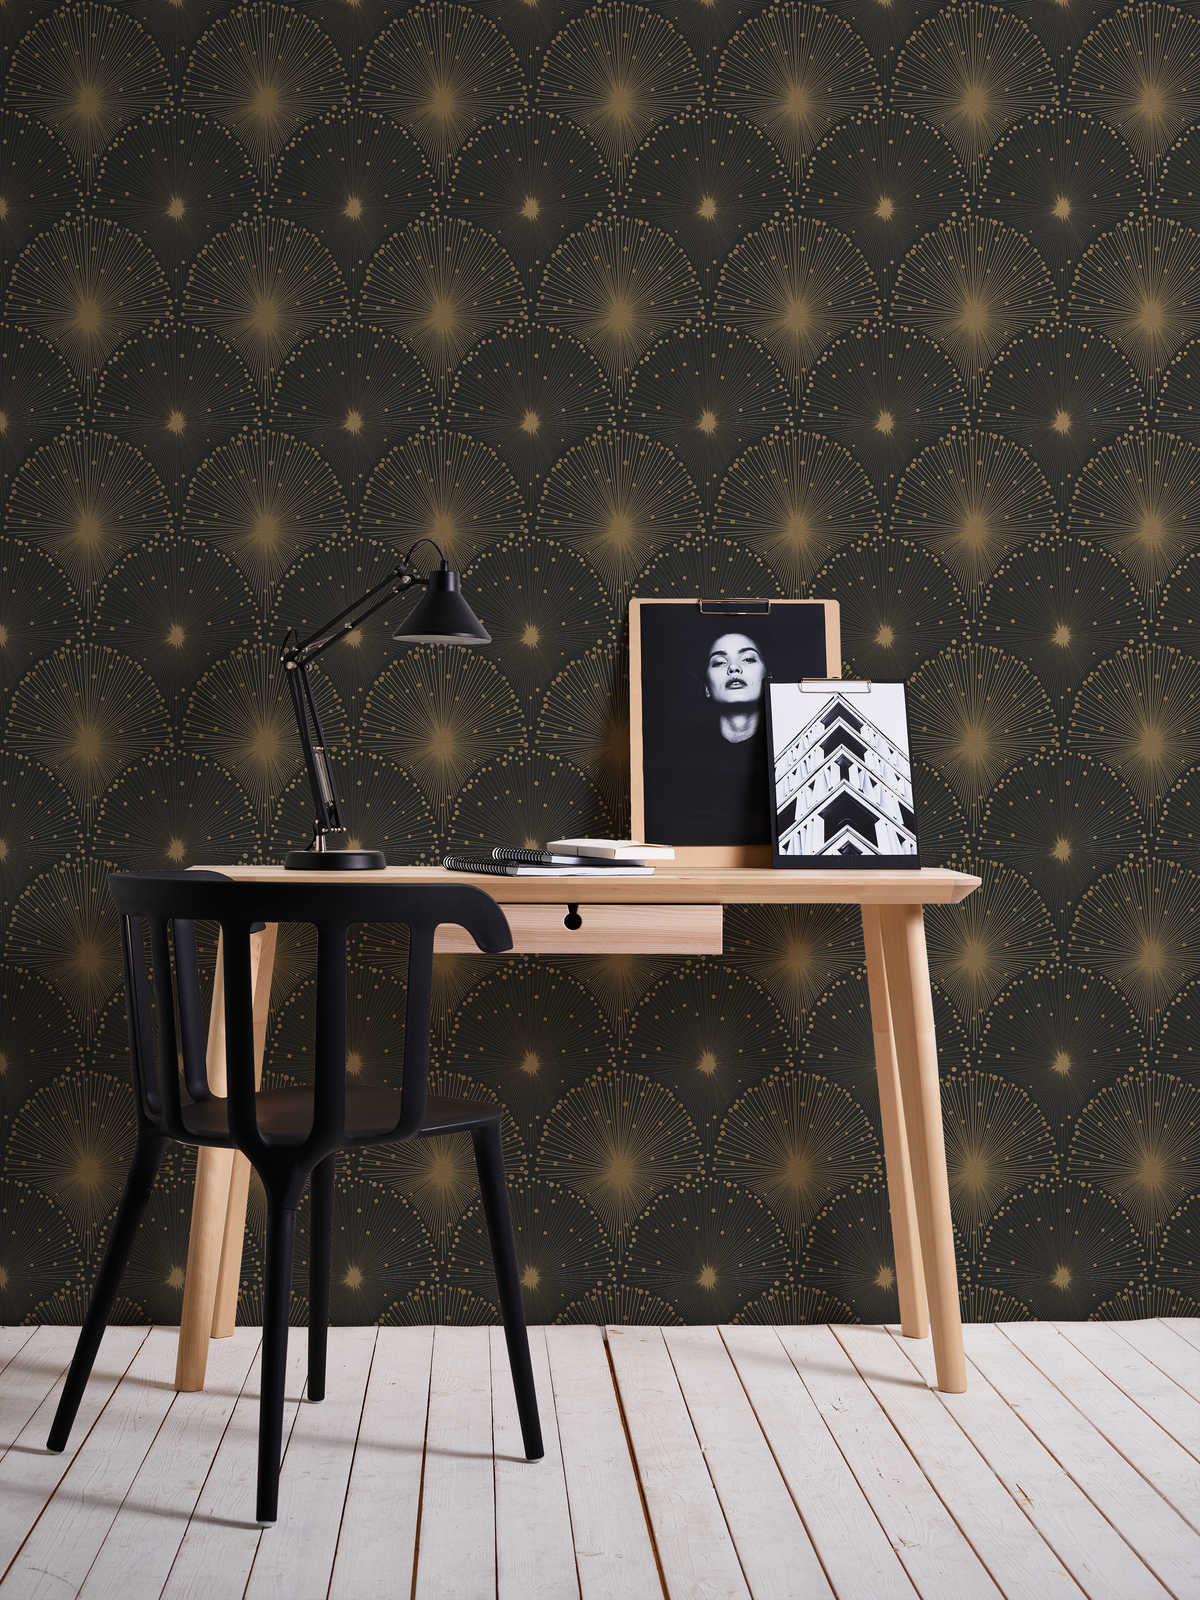             Wallpaper metallic effect in art deco style - gold, black
        